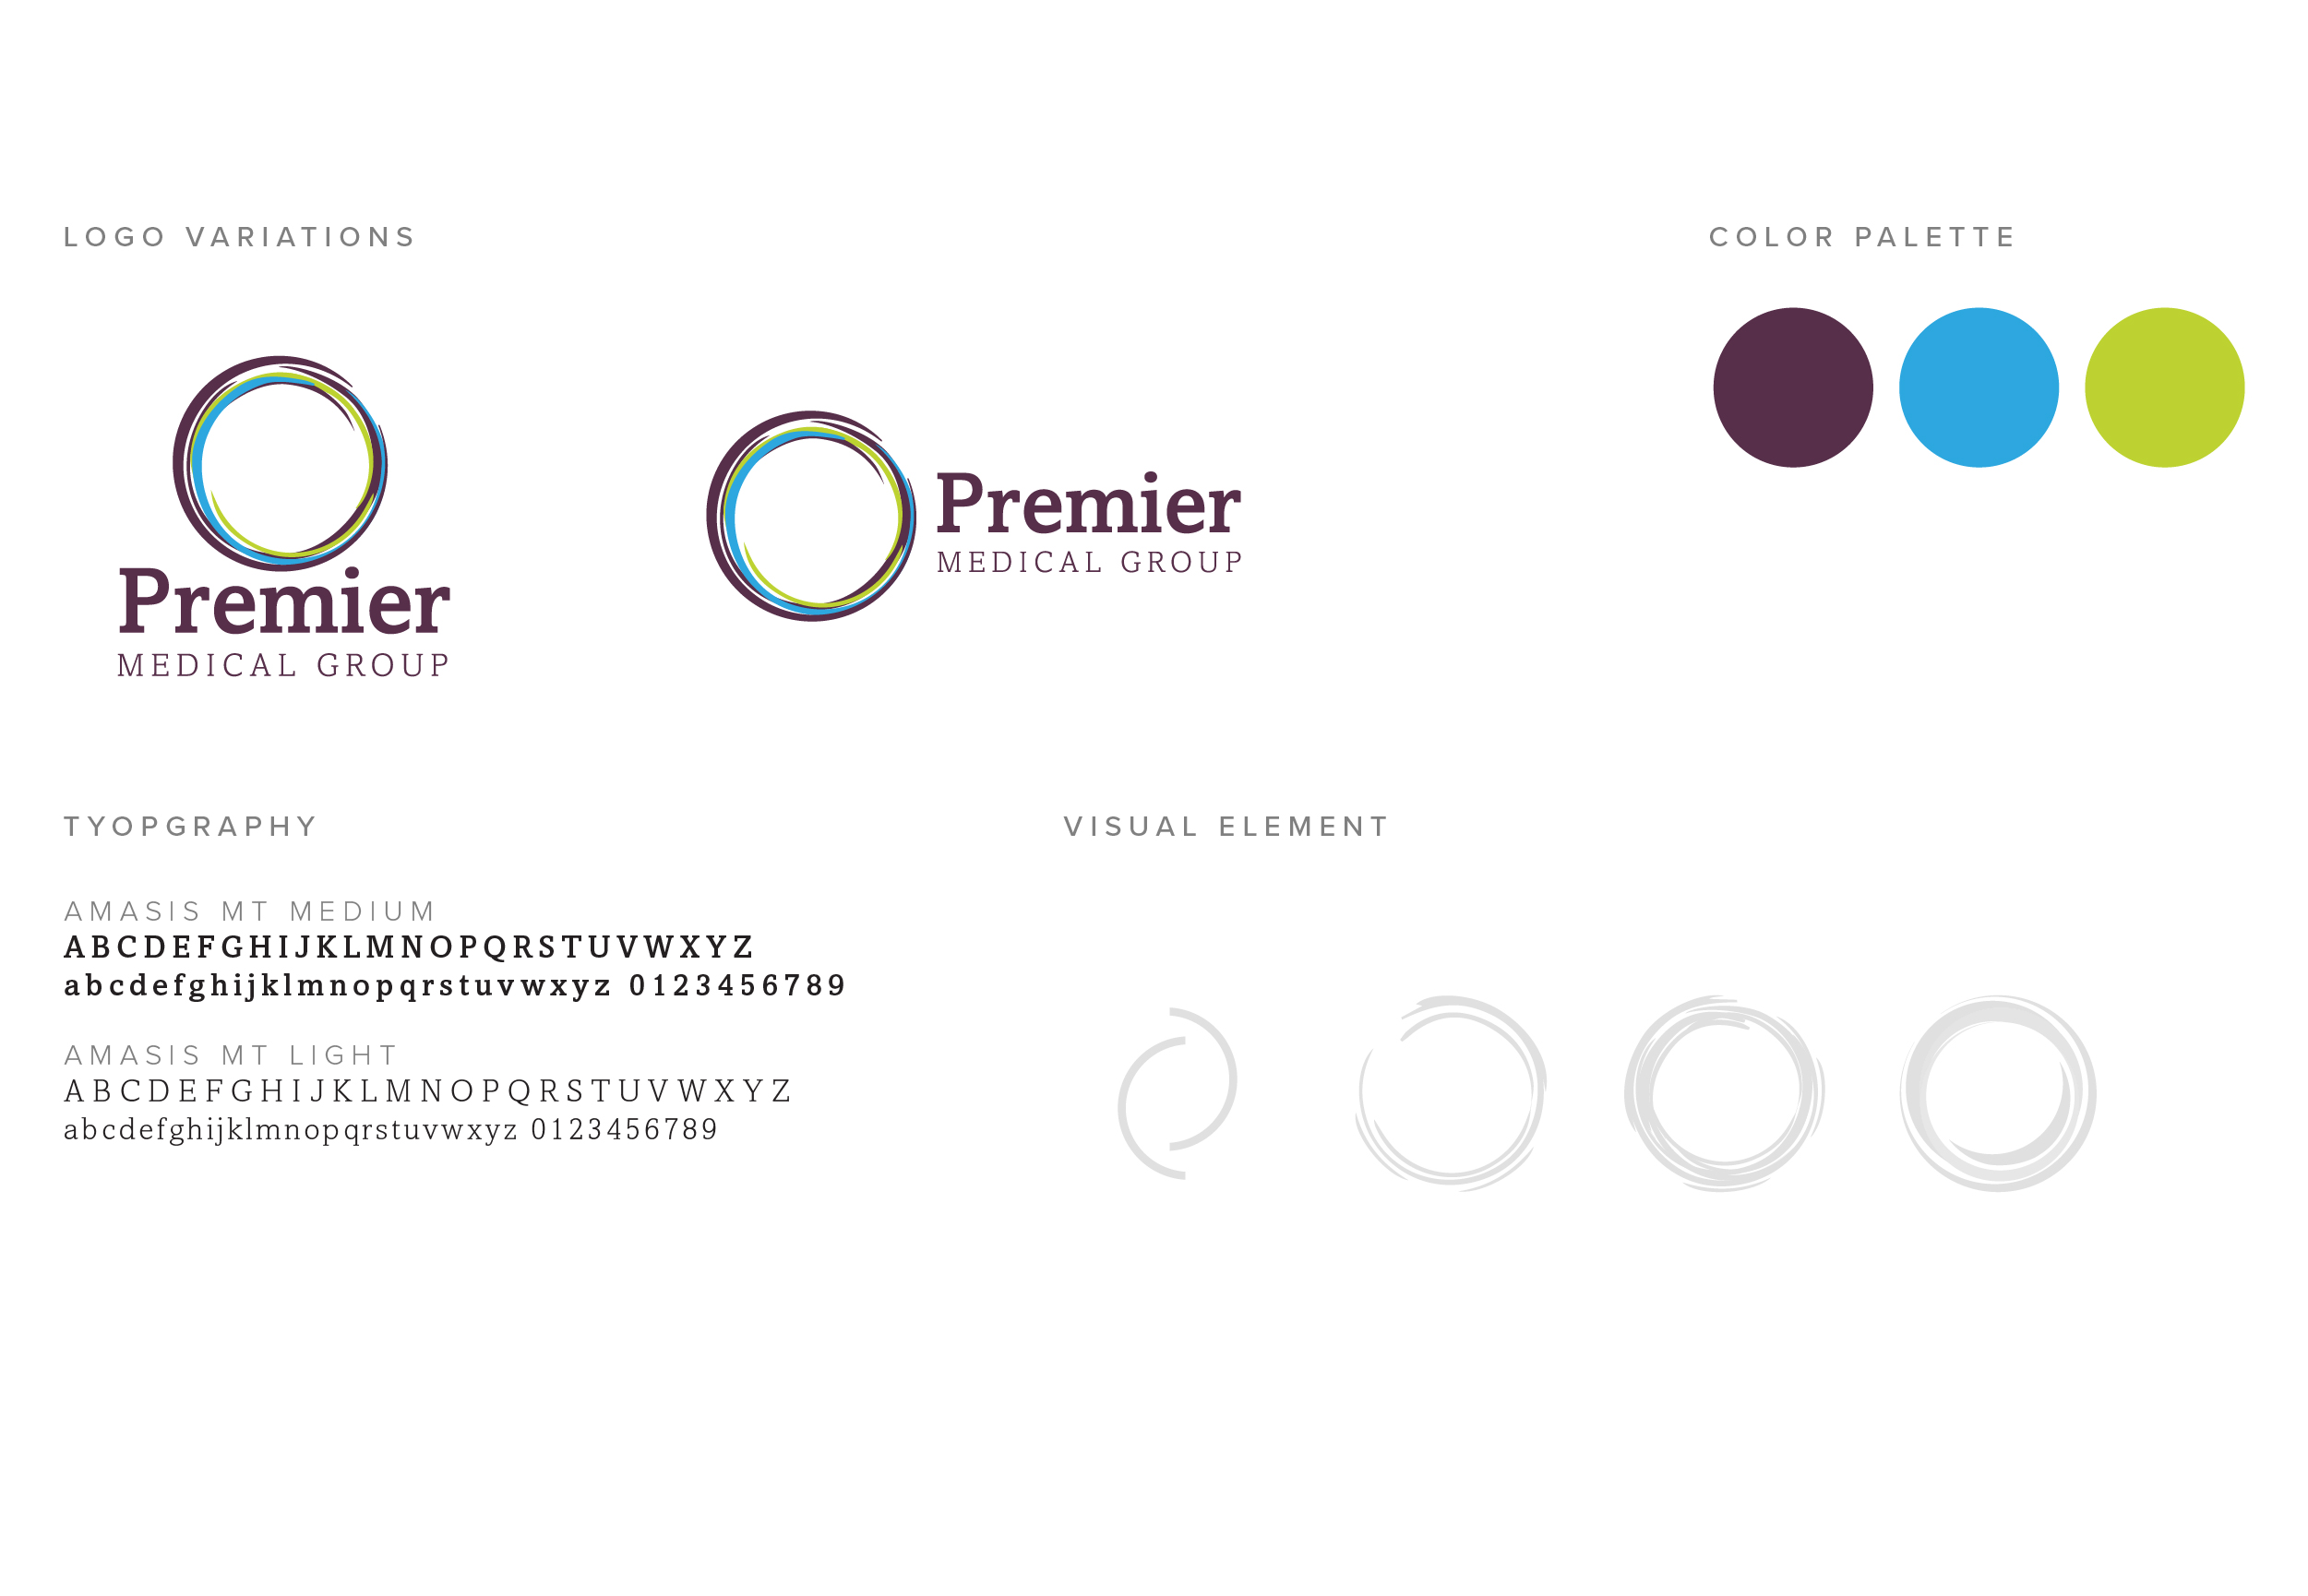 Premier Medical Group Brand Overview